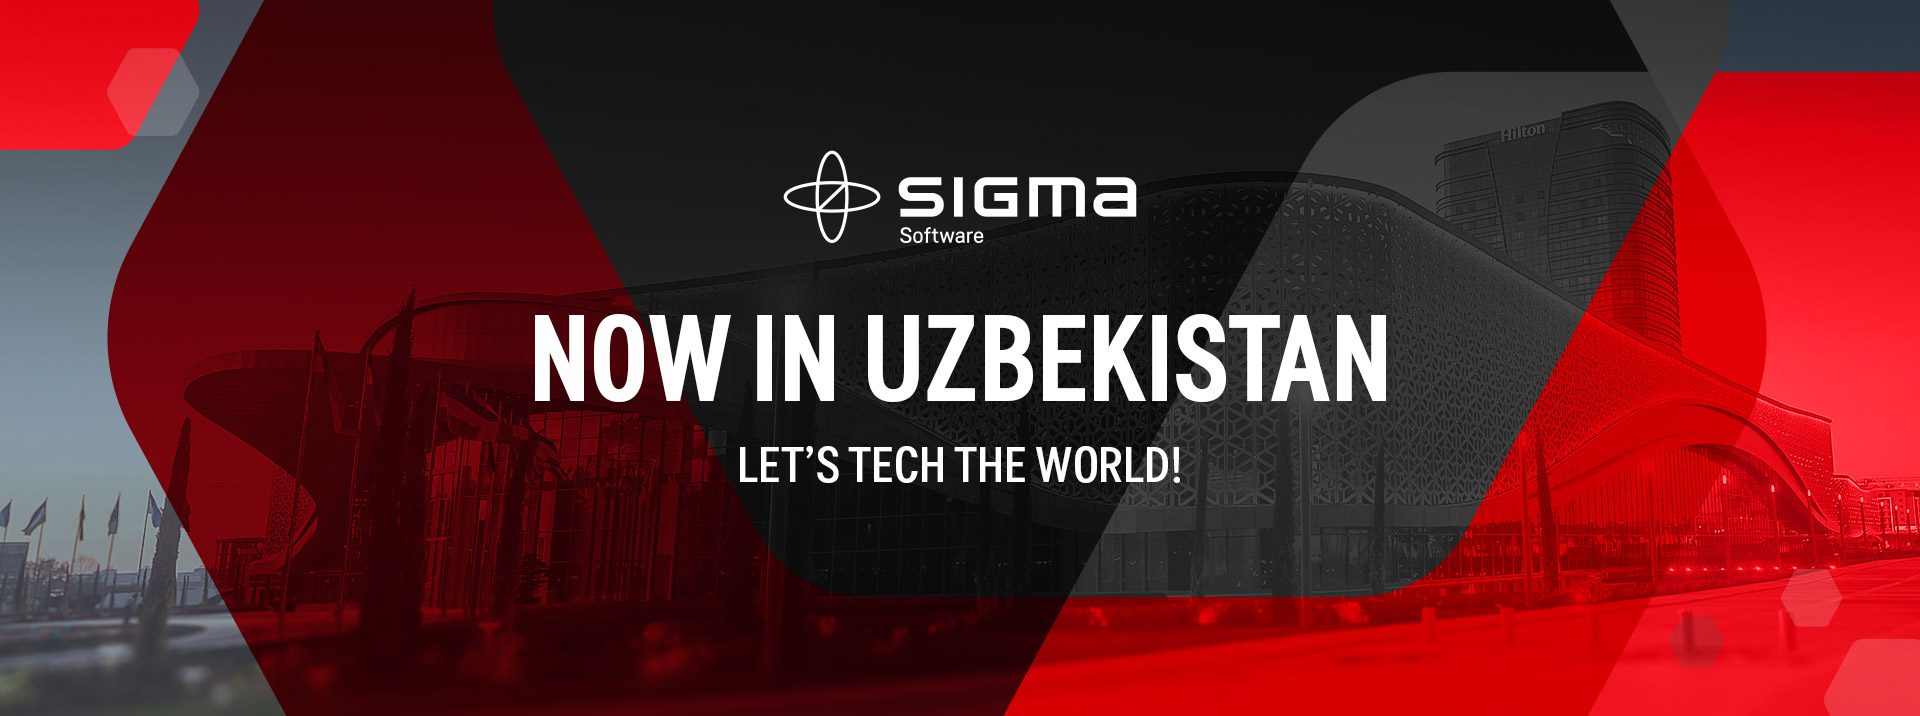 Sigma Software in Uzbeckistan